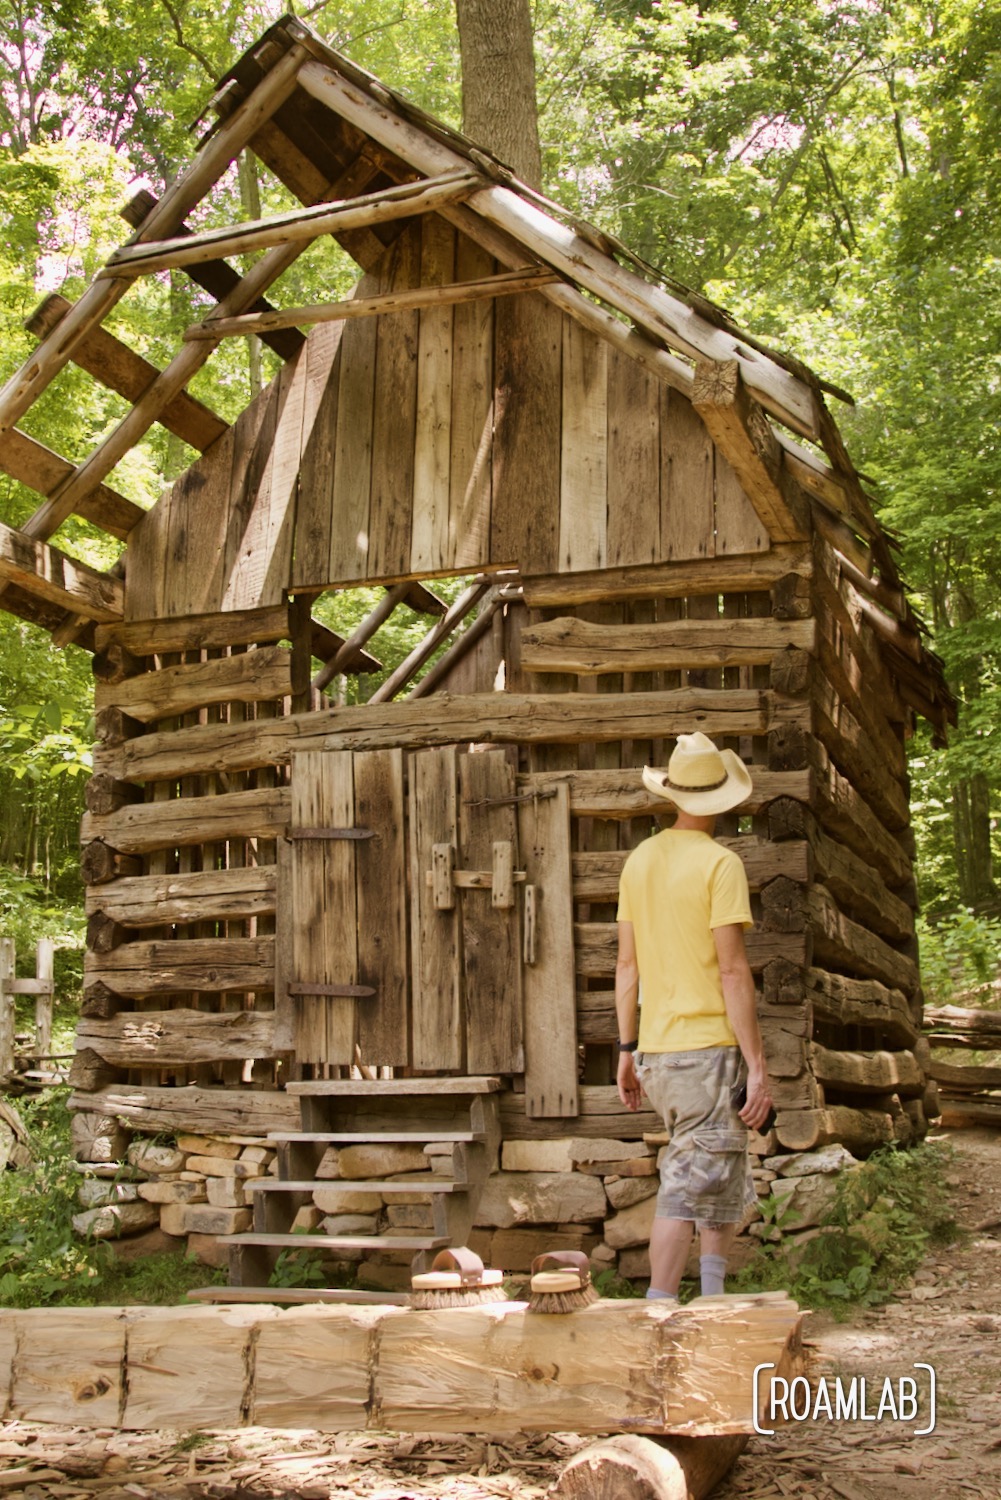 Man walking around and partially assembled wood hog crib.